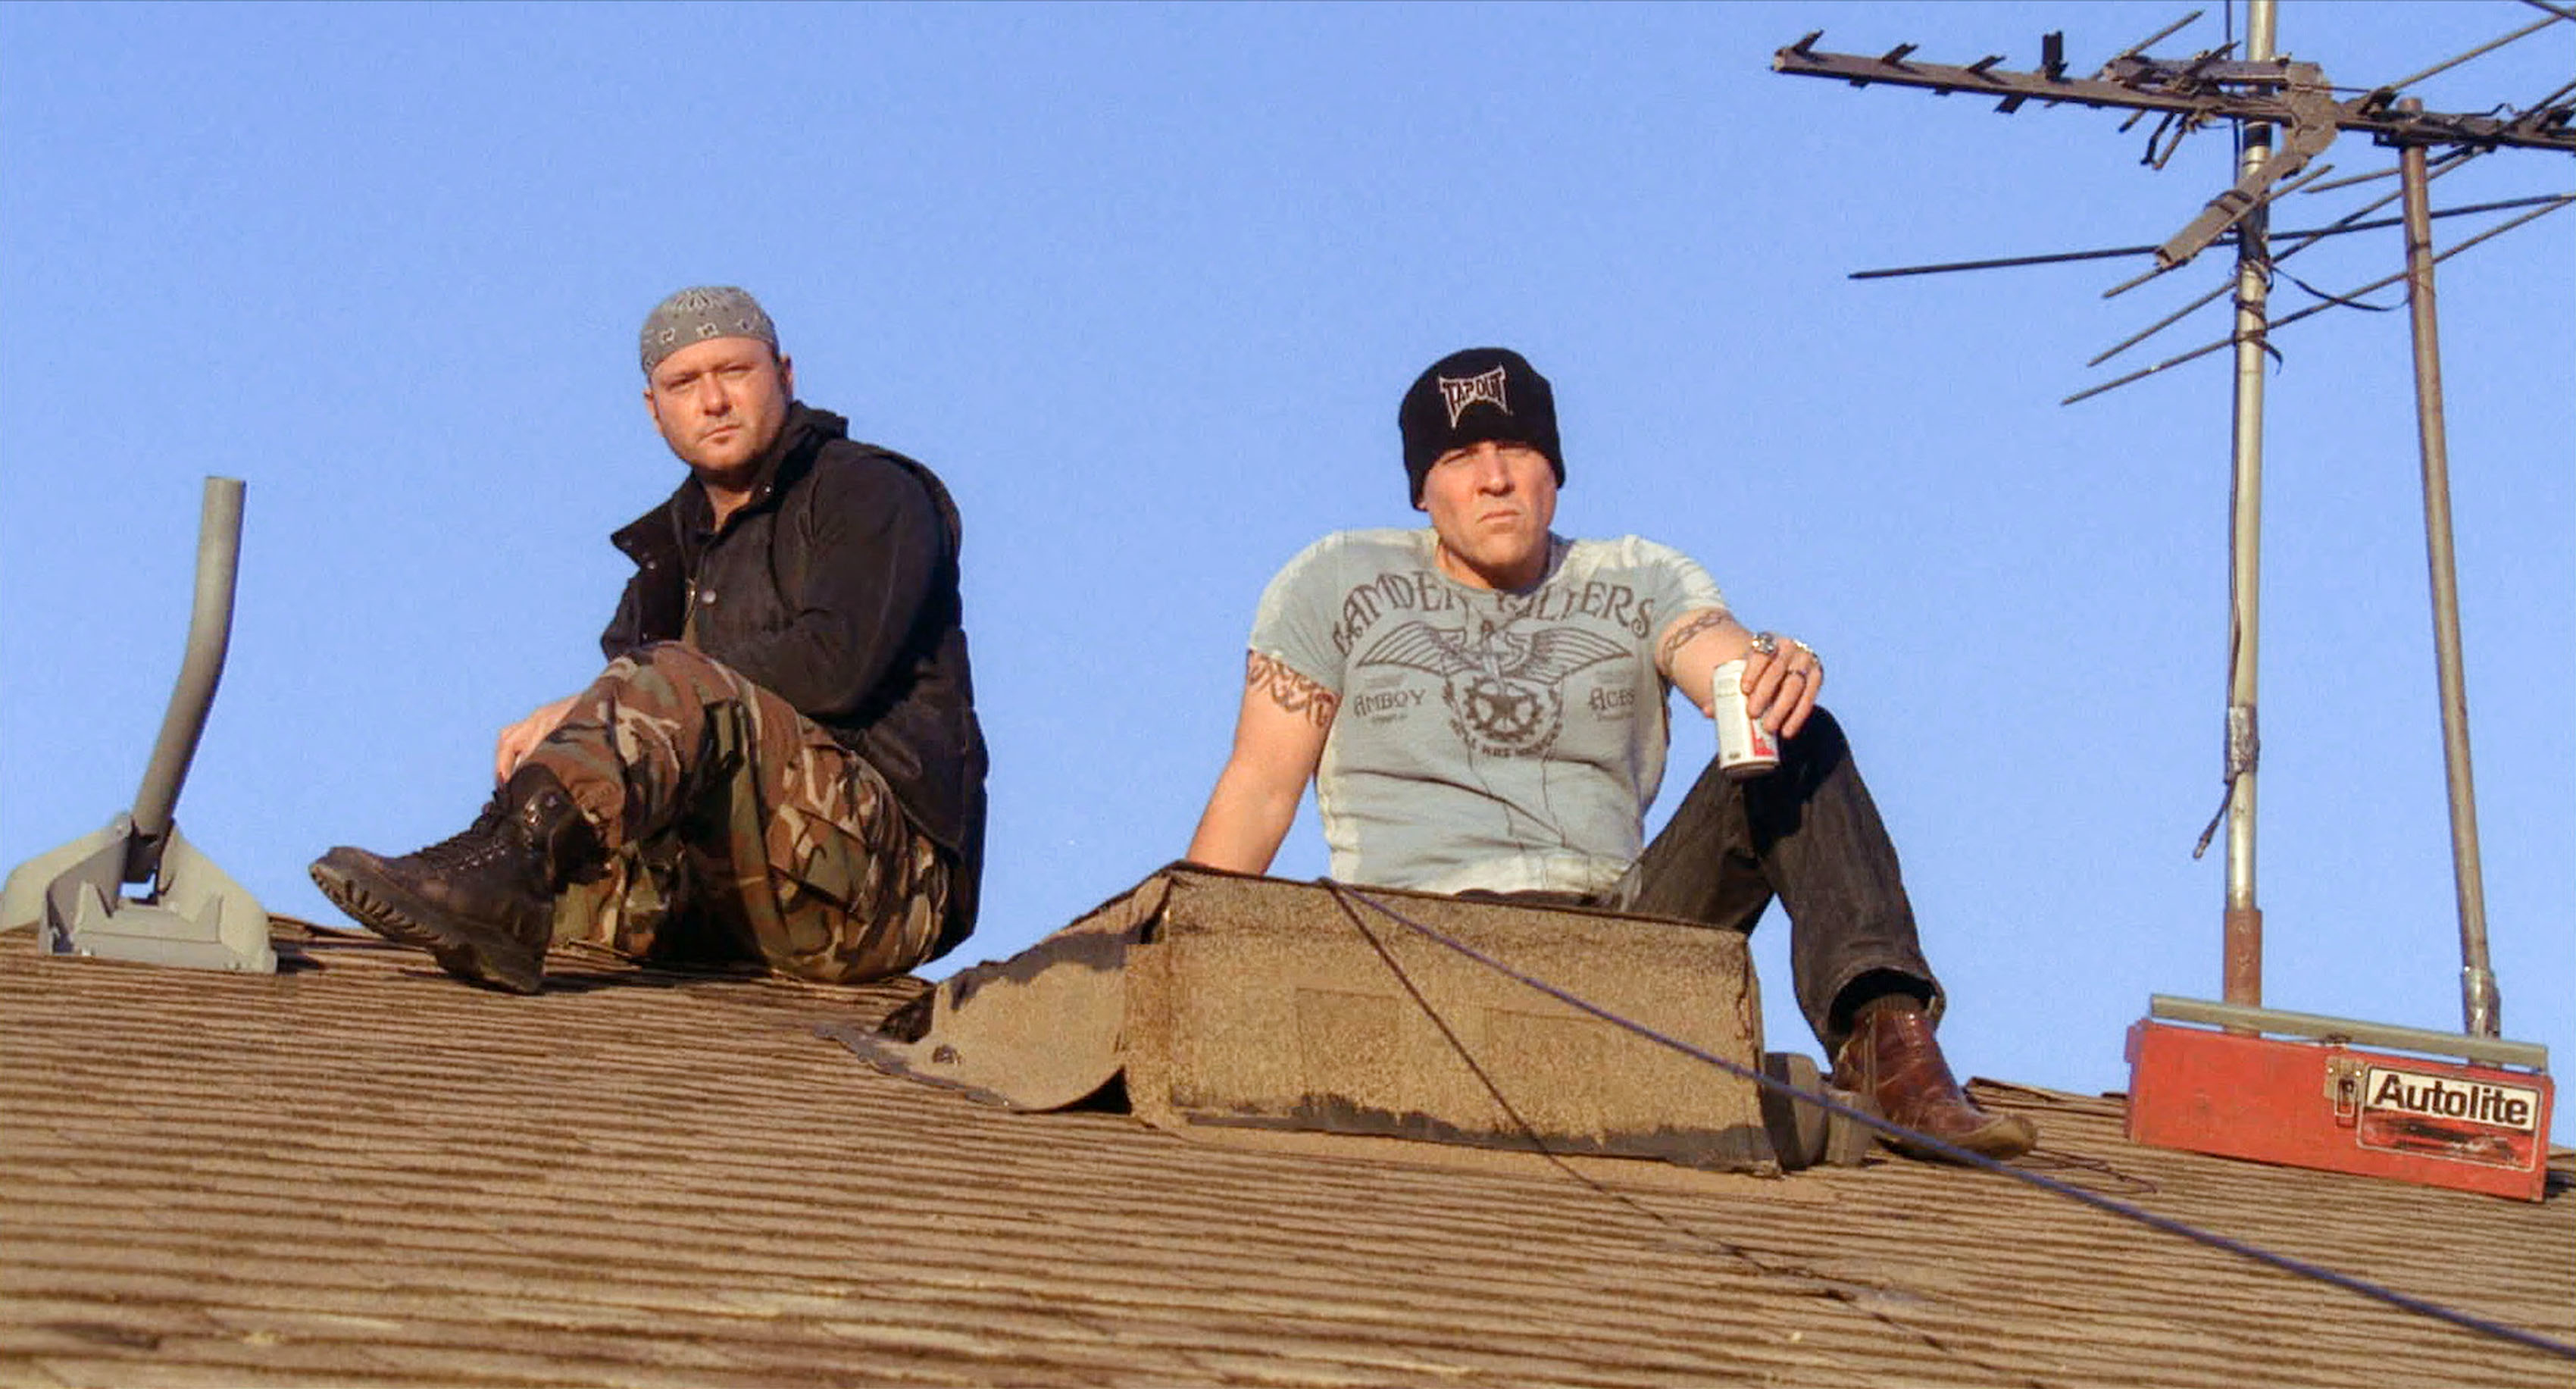 Tim McGraw and Jon Favreau and sitting on a roof